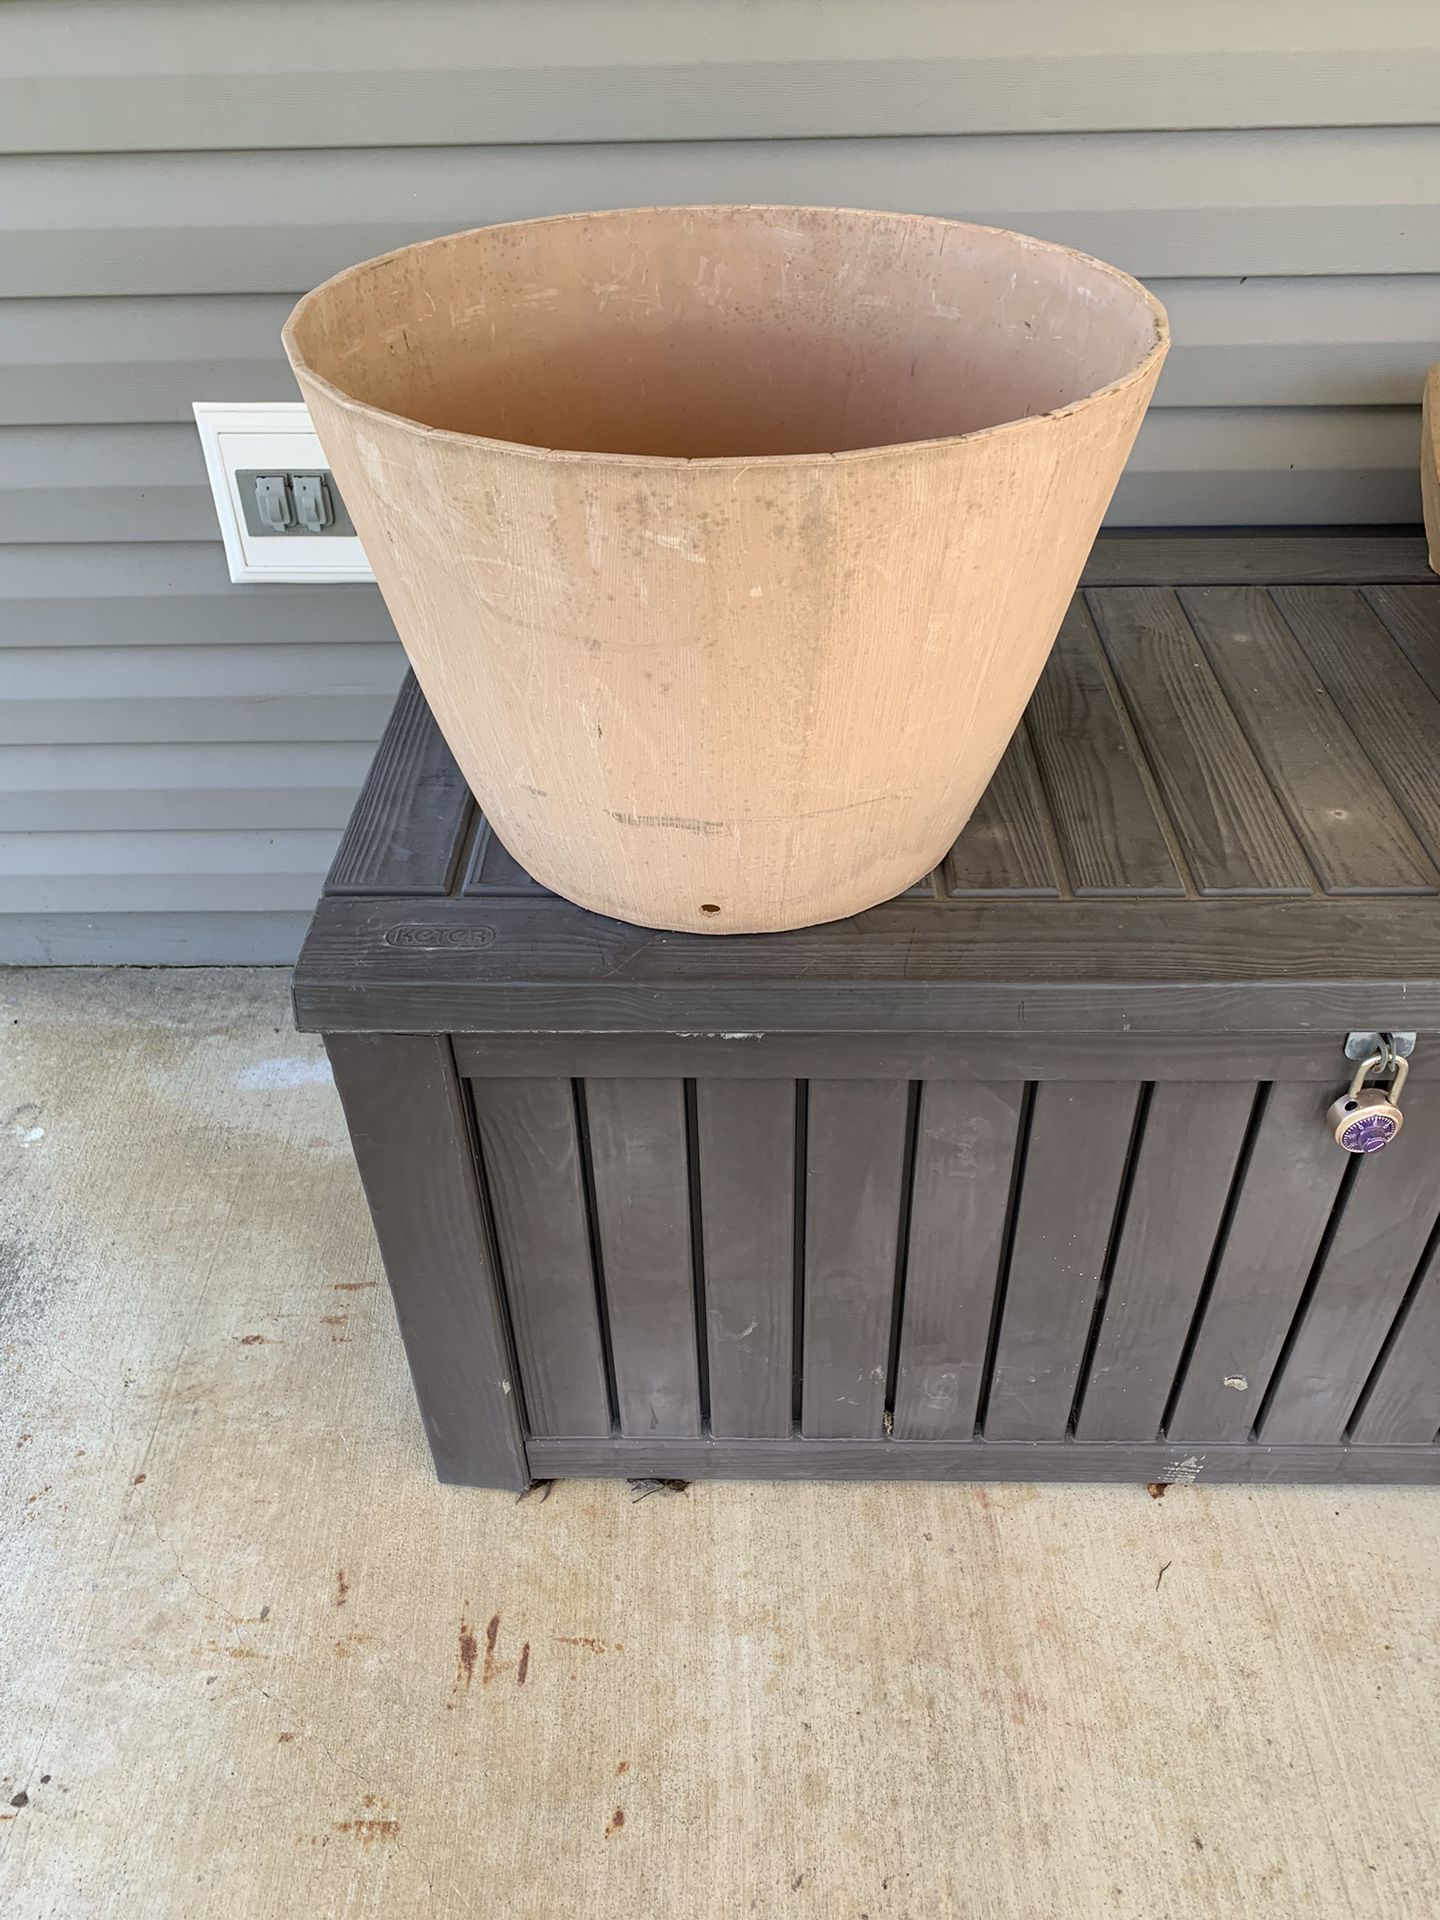 Planter / Flower Pot 